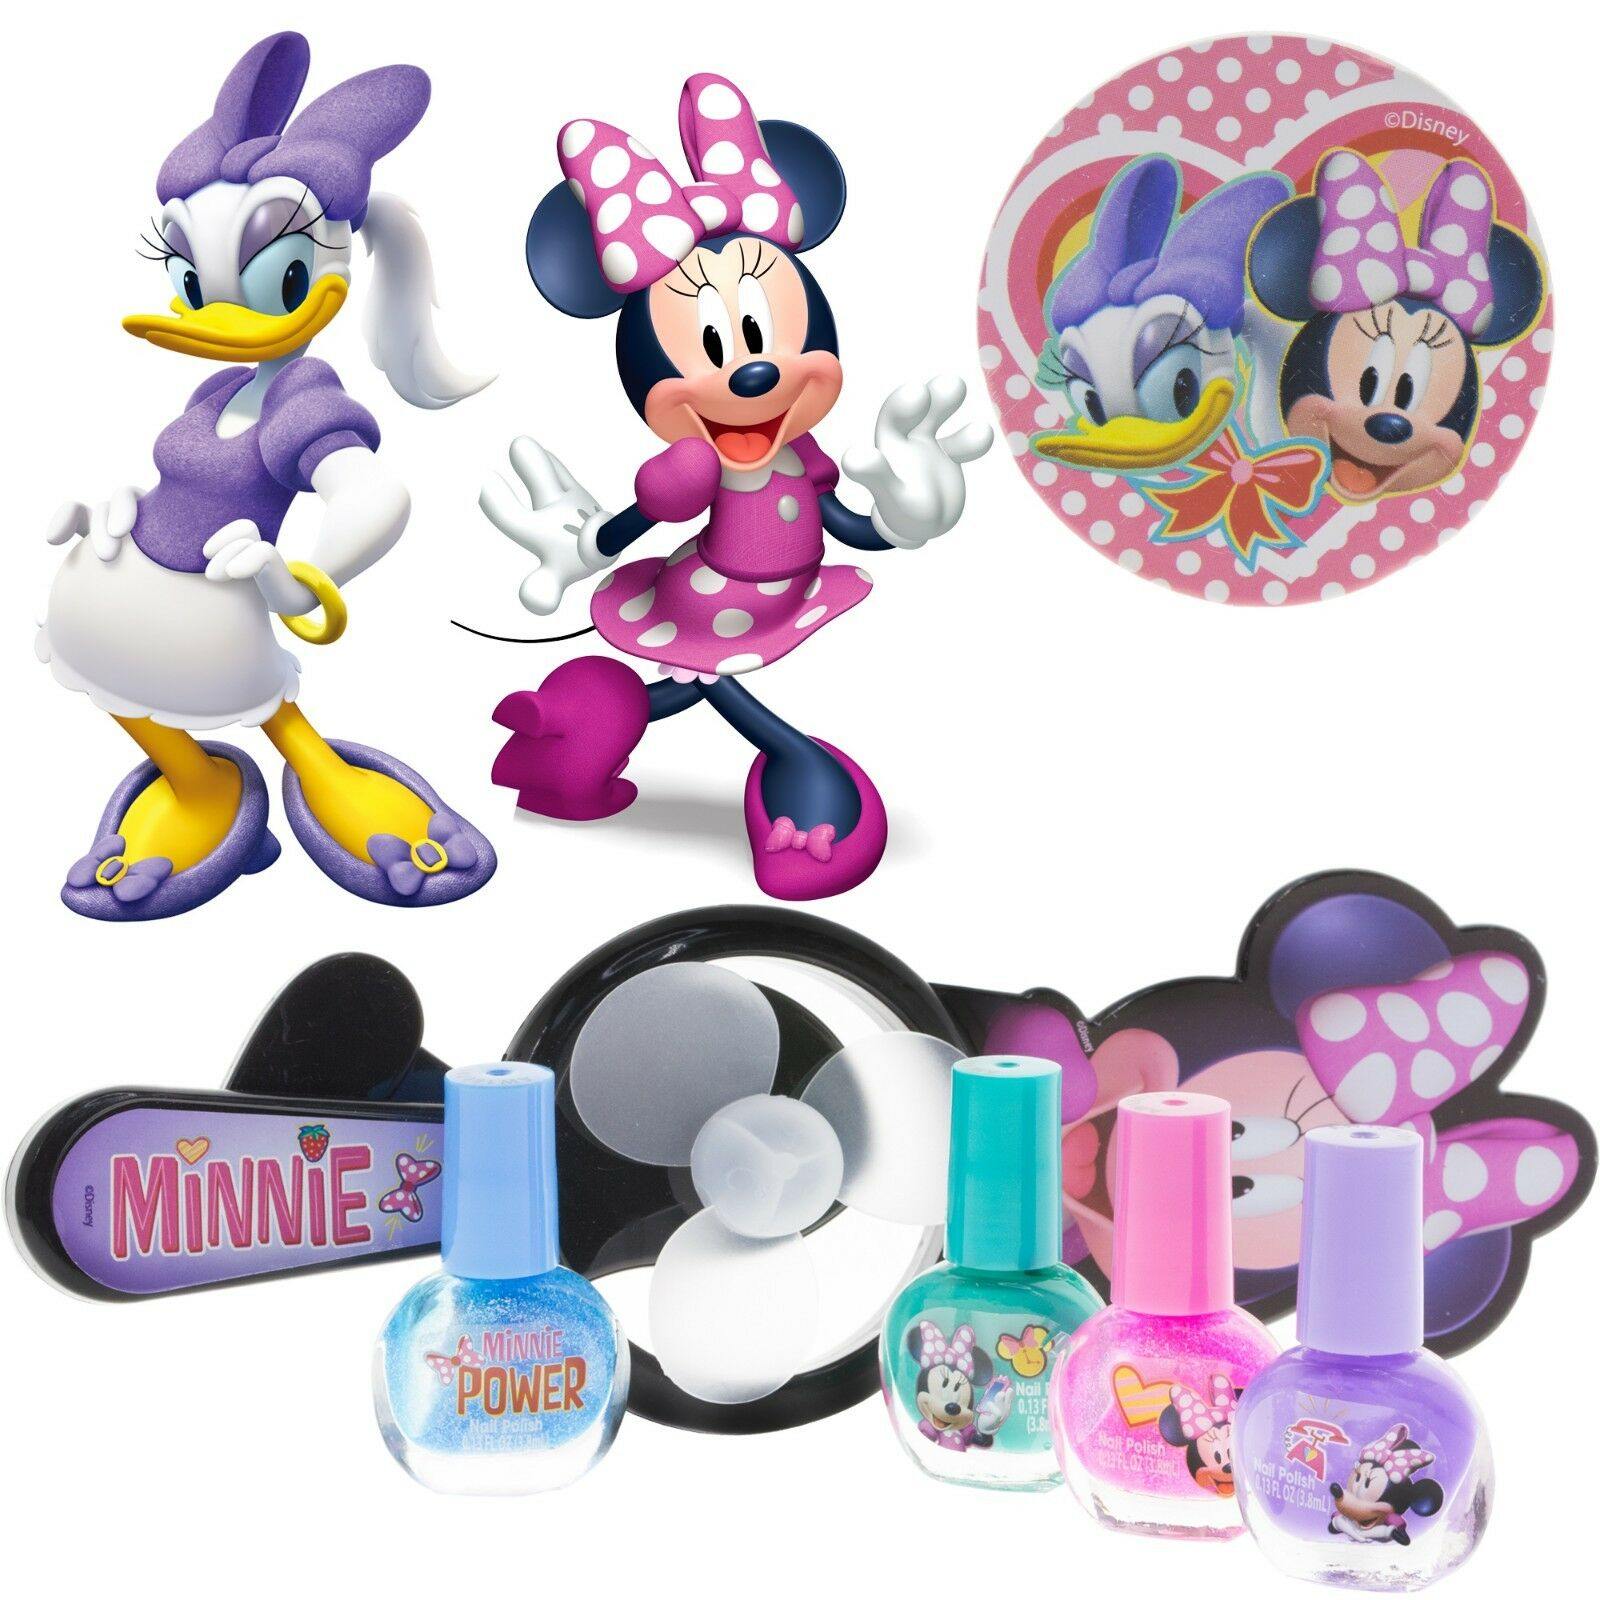 Disney Minnie Mouse Cosmetic Set Nail Polish File Fan Dryer 6 Piece